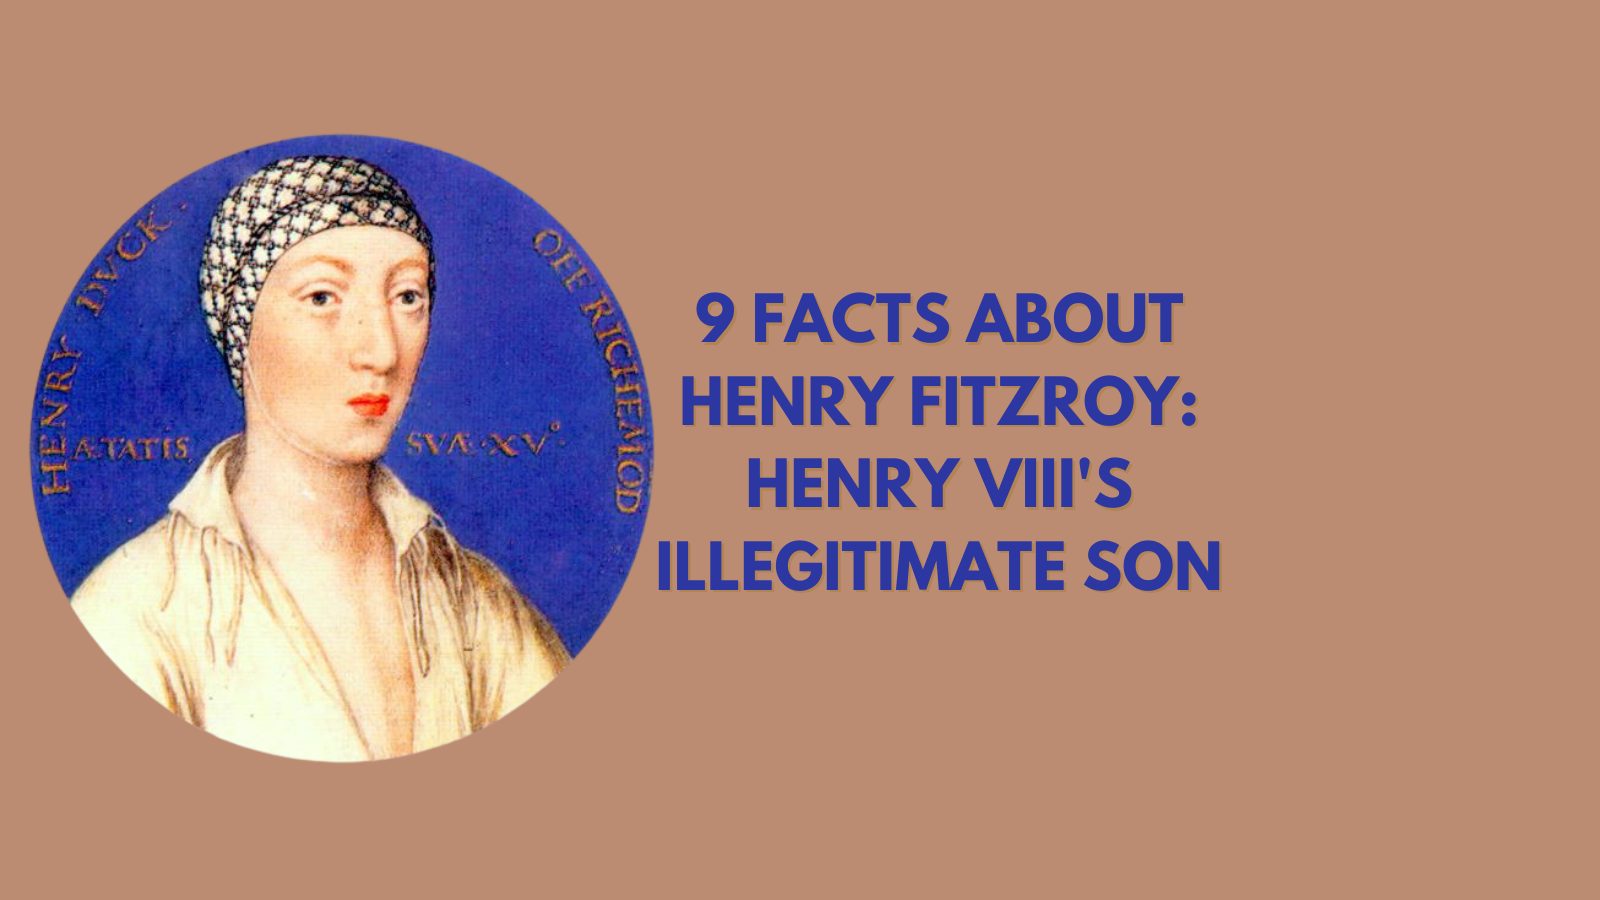 Henry Fitzroy